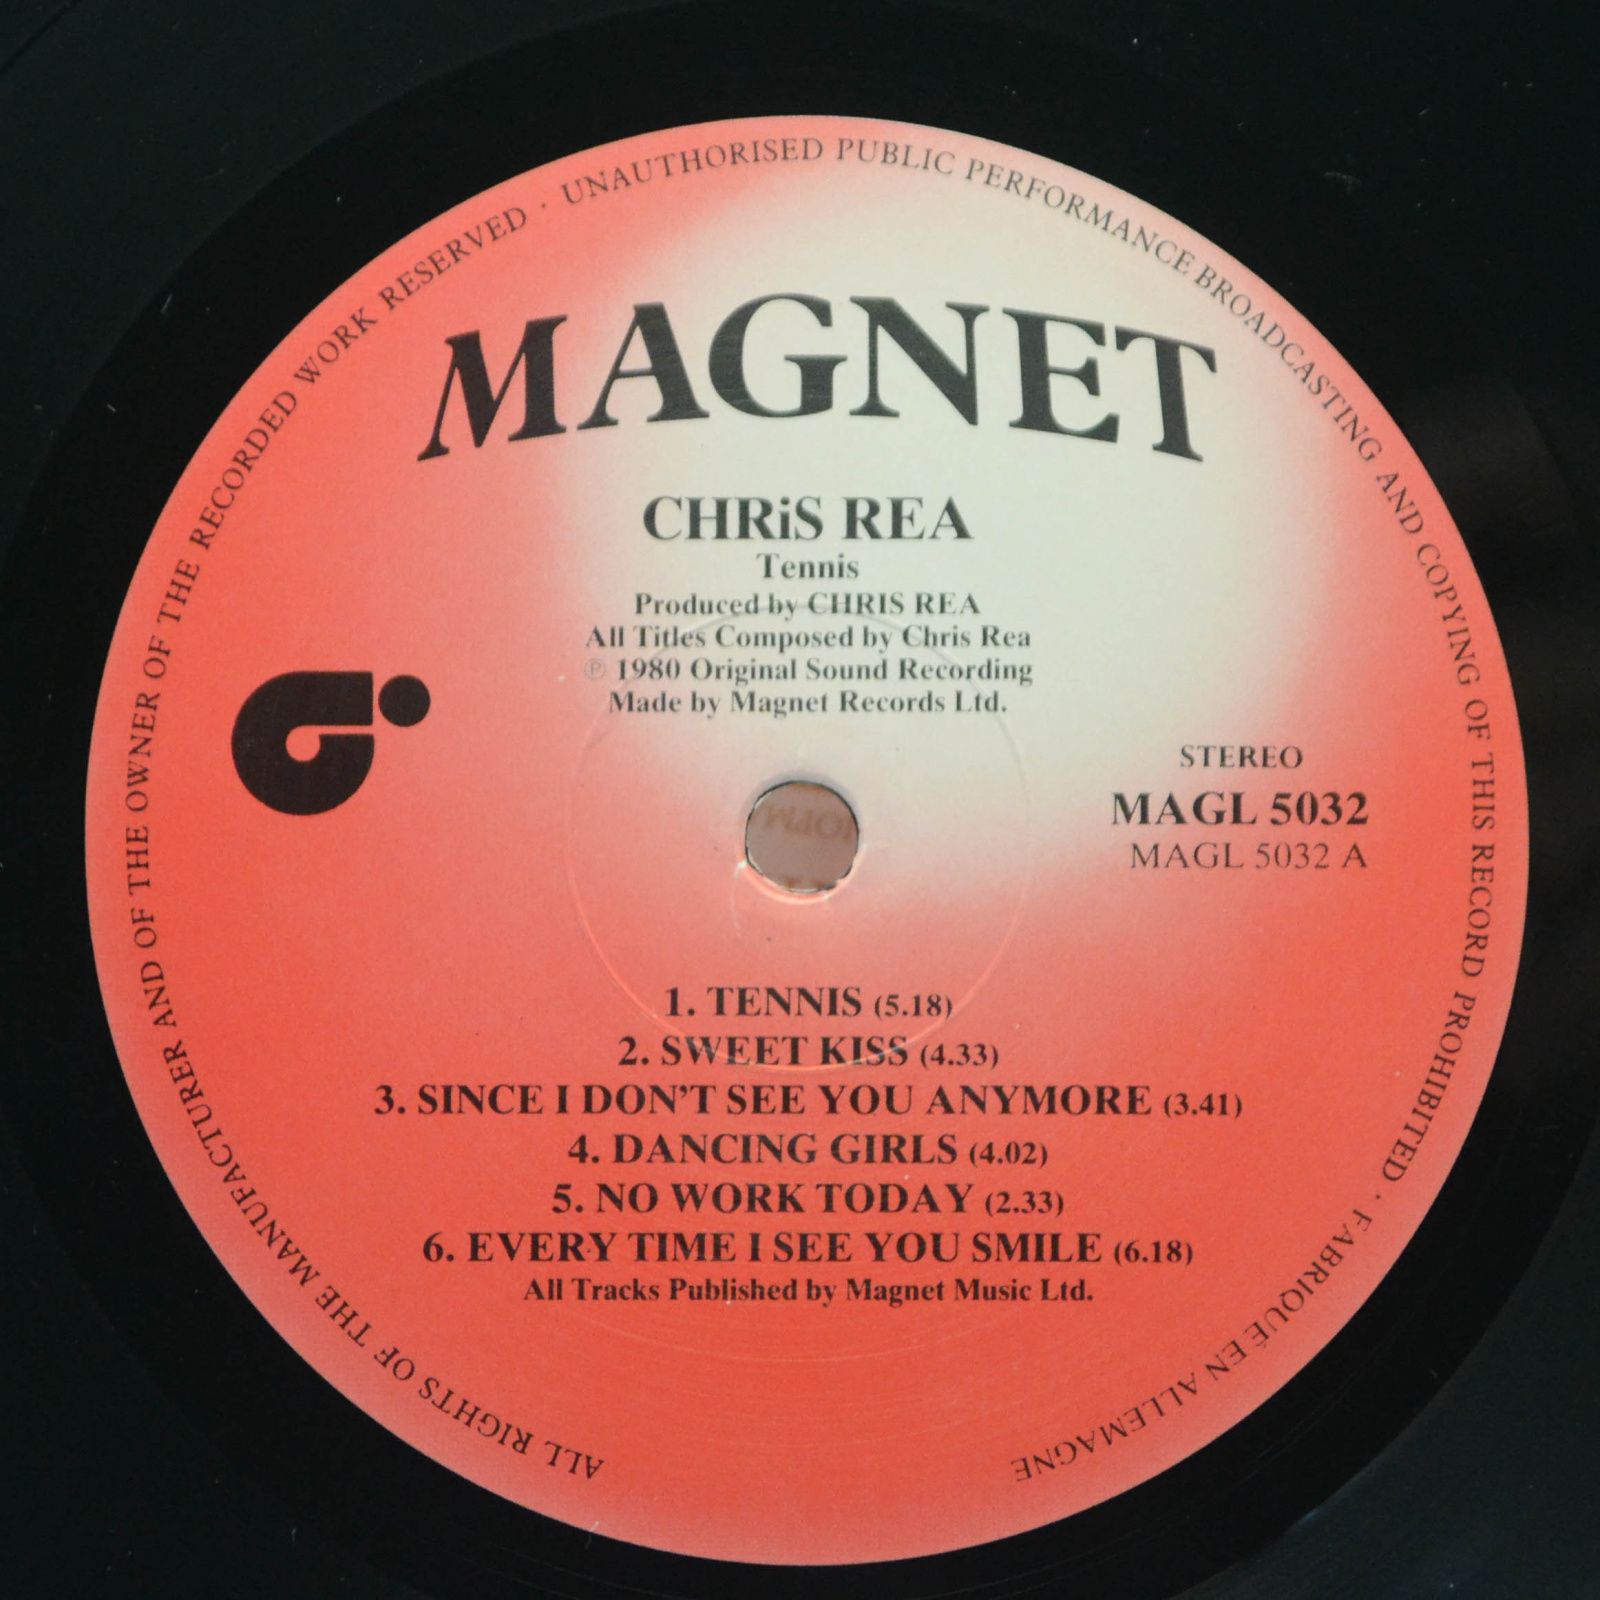 Chris Rea — Tennis, 1983